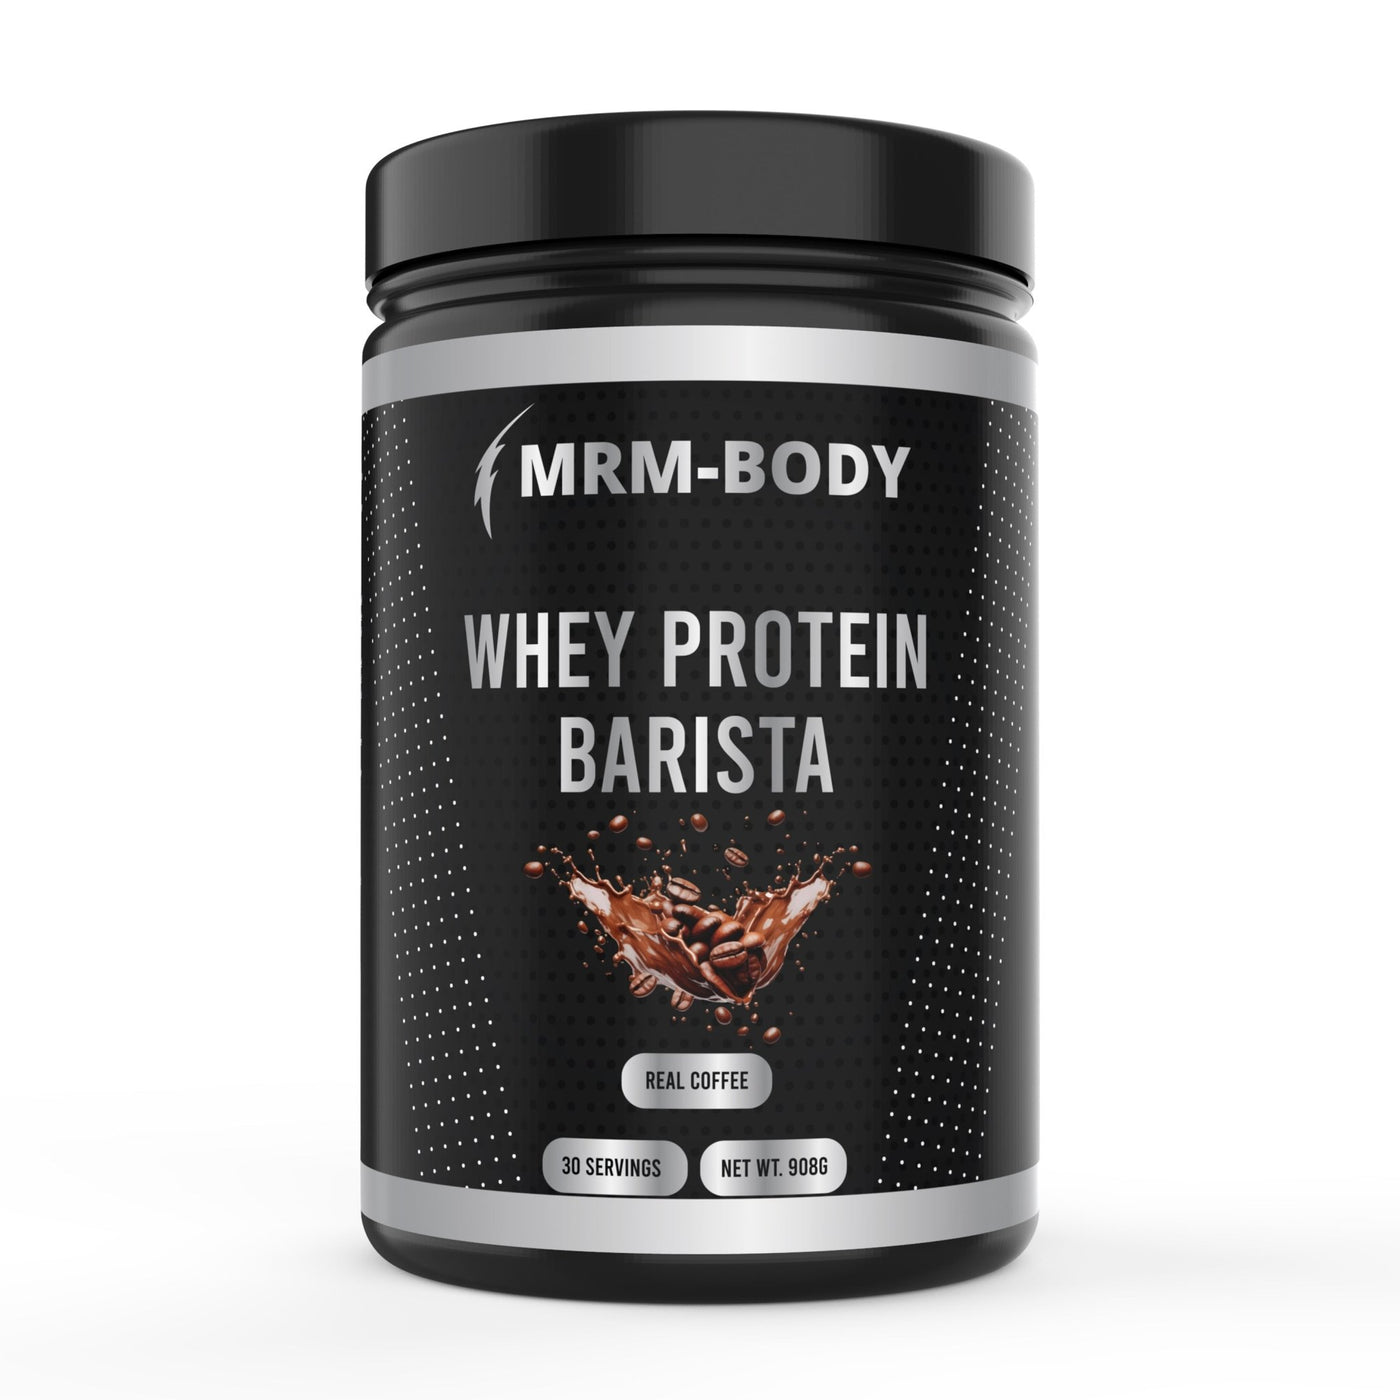 Whey Protein Barista - MRM-BODY